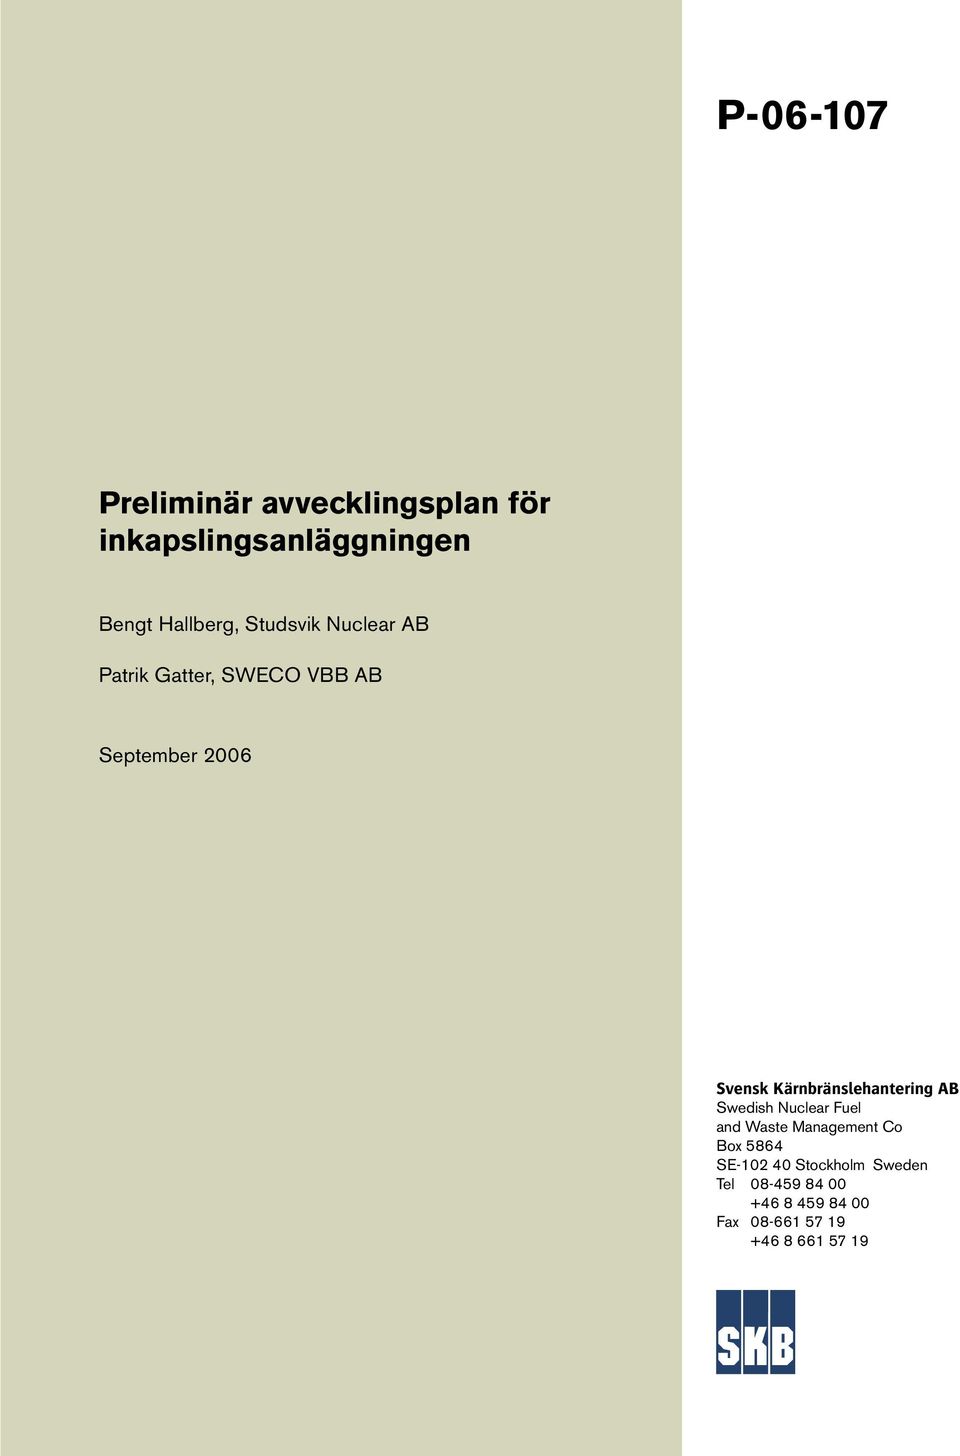 Kärnbränslehantering AB Swedish Nuclear Fuel and Waste Management Co Box 5864